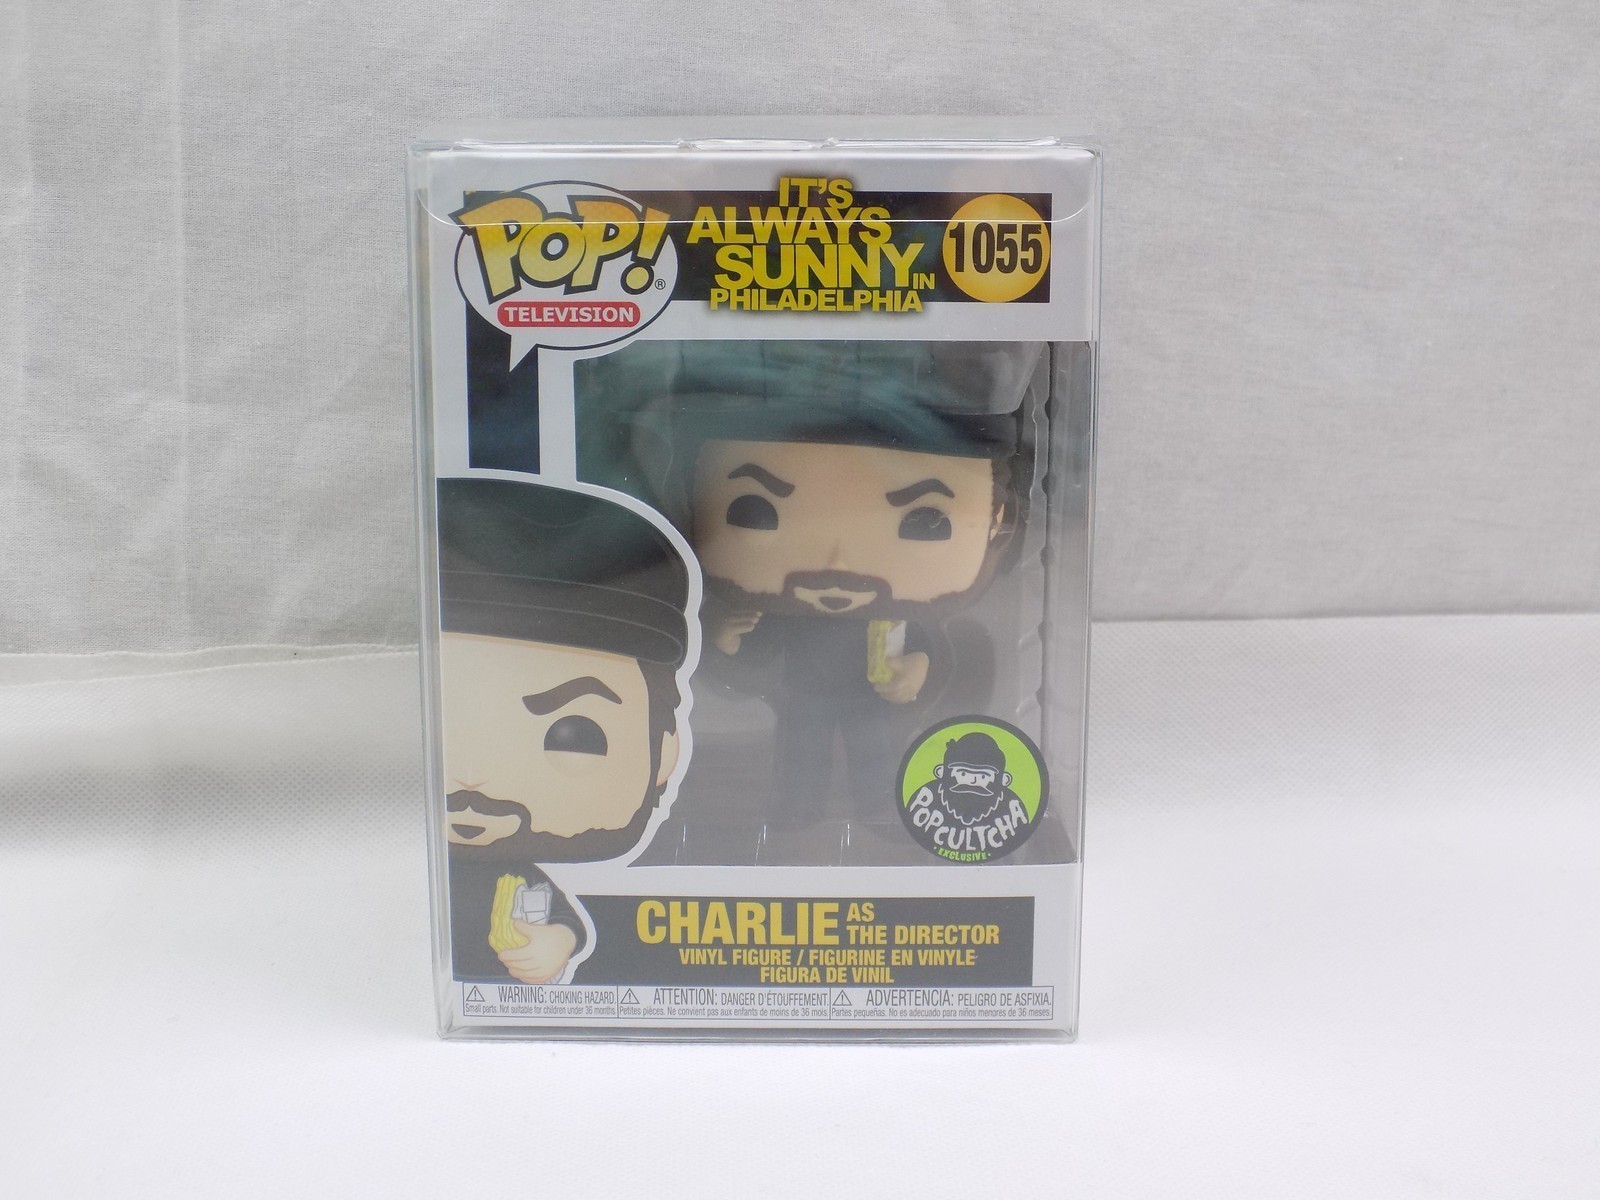 Brand New Funko Pop Charlie As The Director 1055 Its Always Sunny In Philadelphia Vinyl Figure 